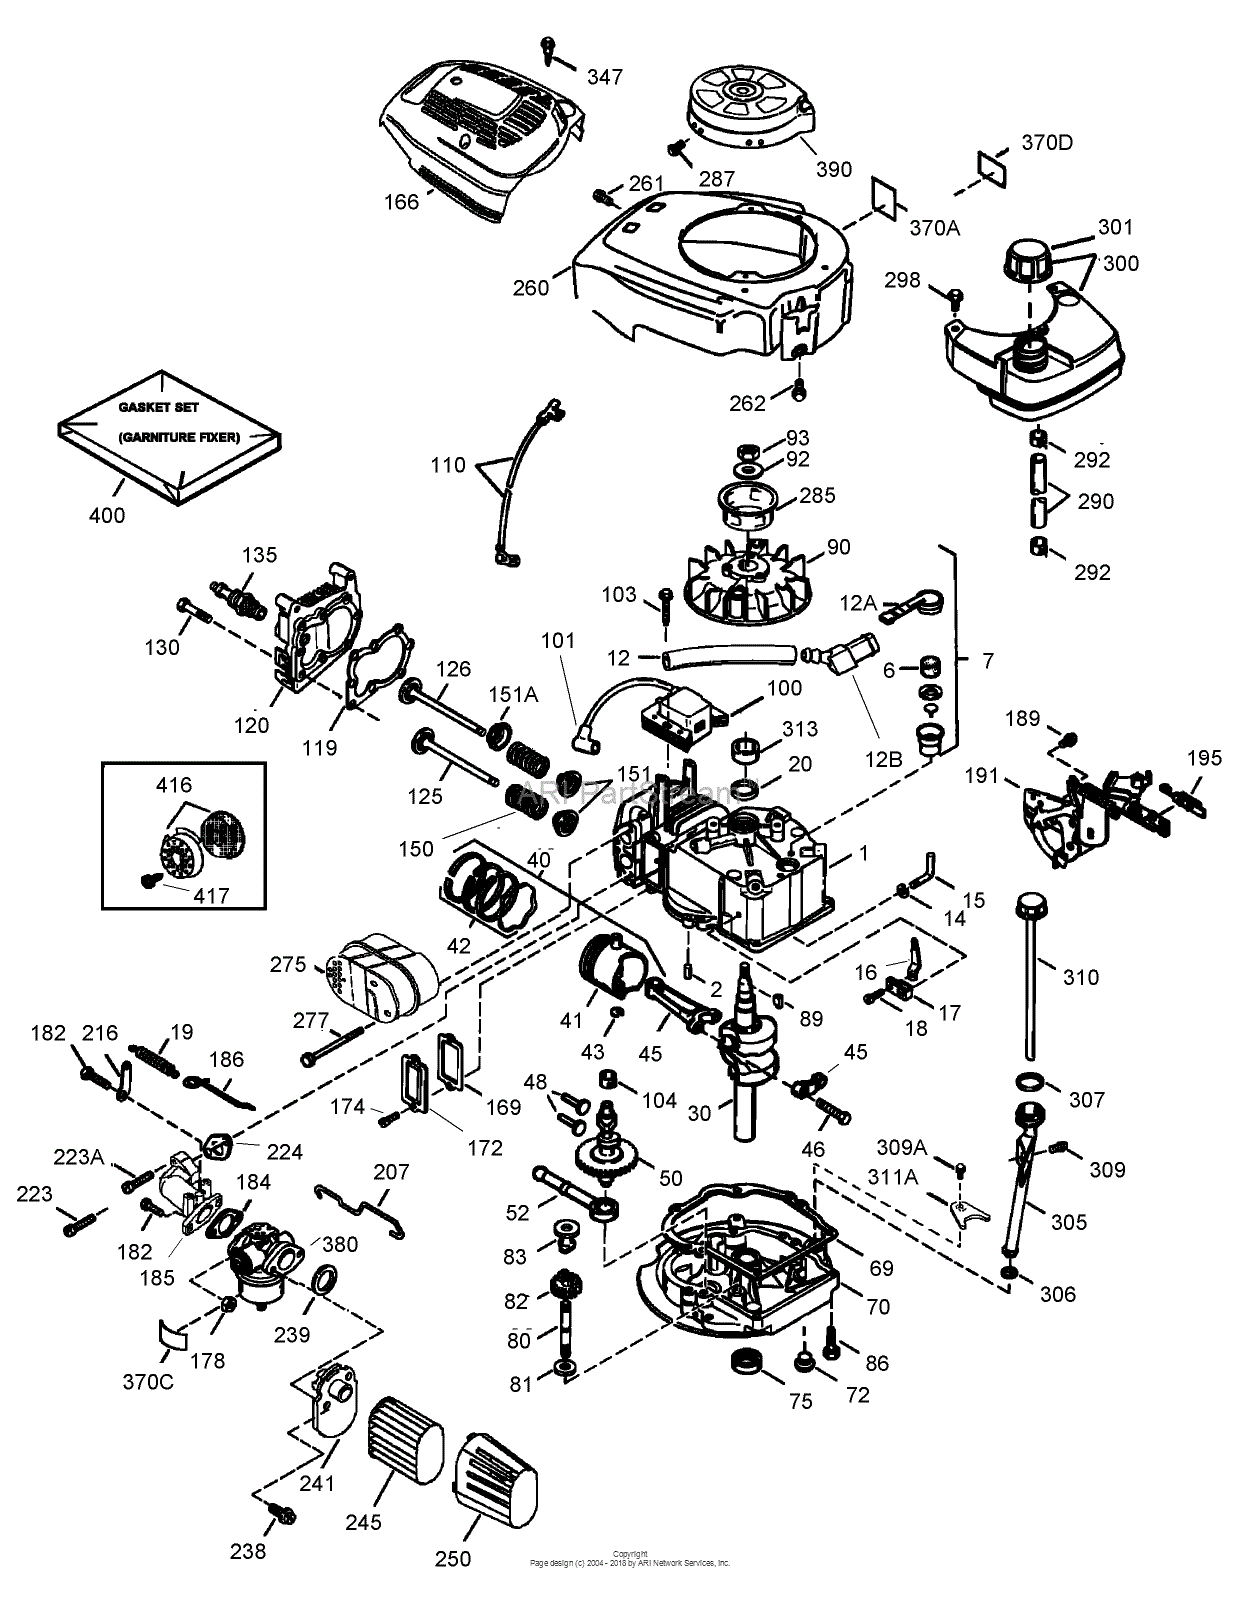 Diagram Of Lawn Mower Engine